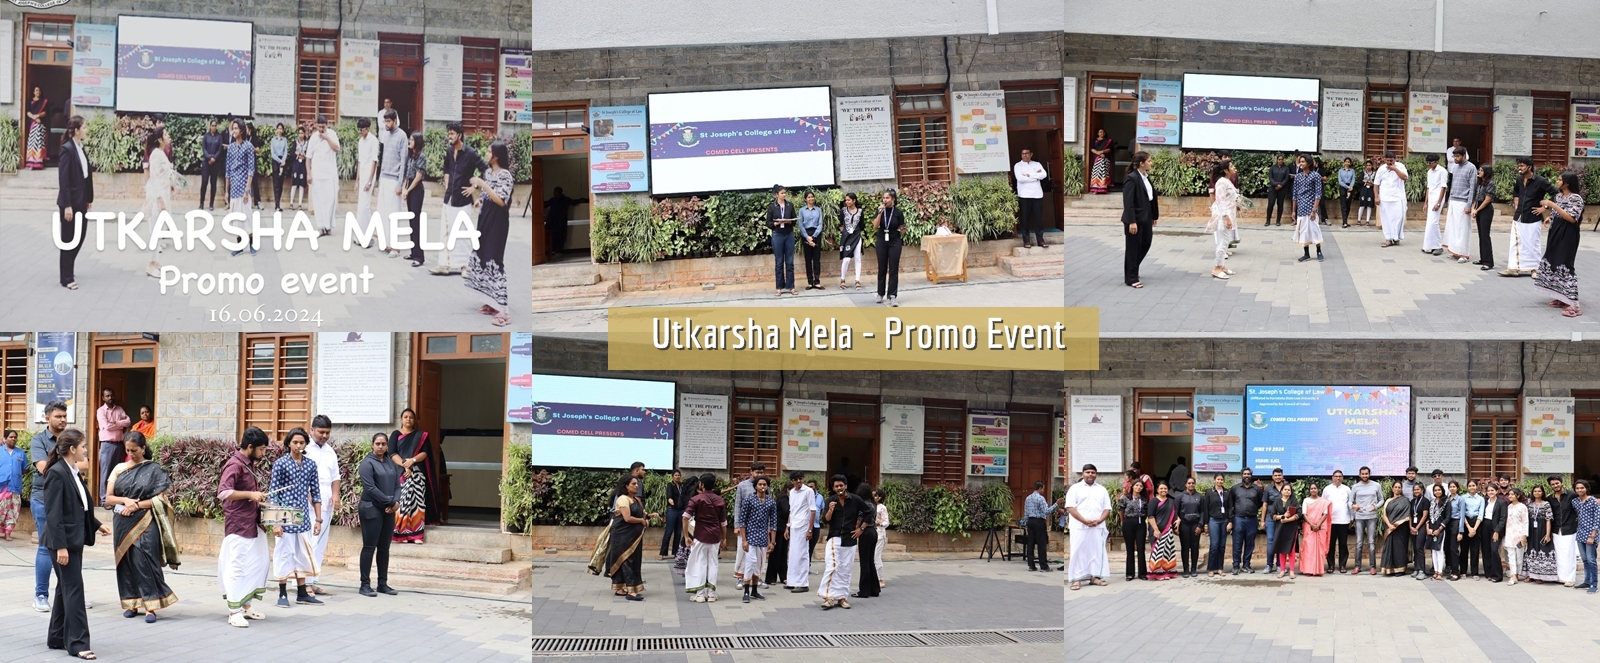 Utkarsha Mela - Promo Event